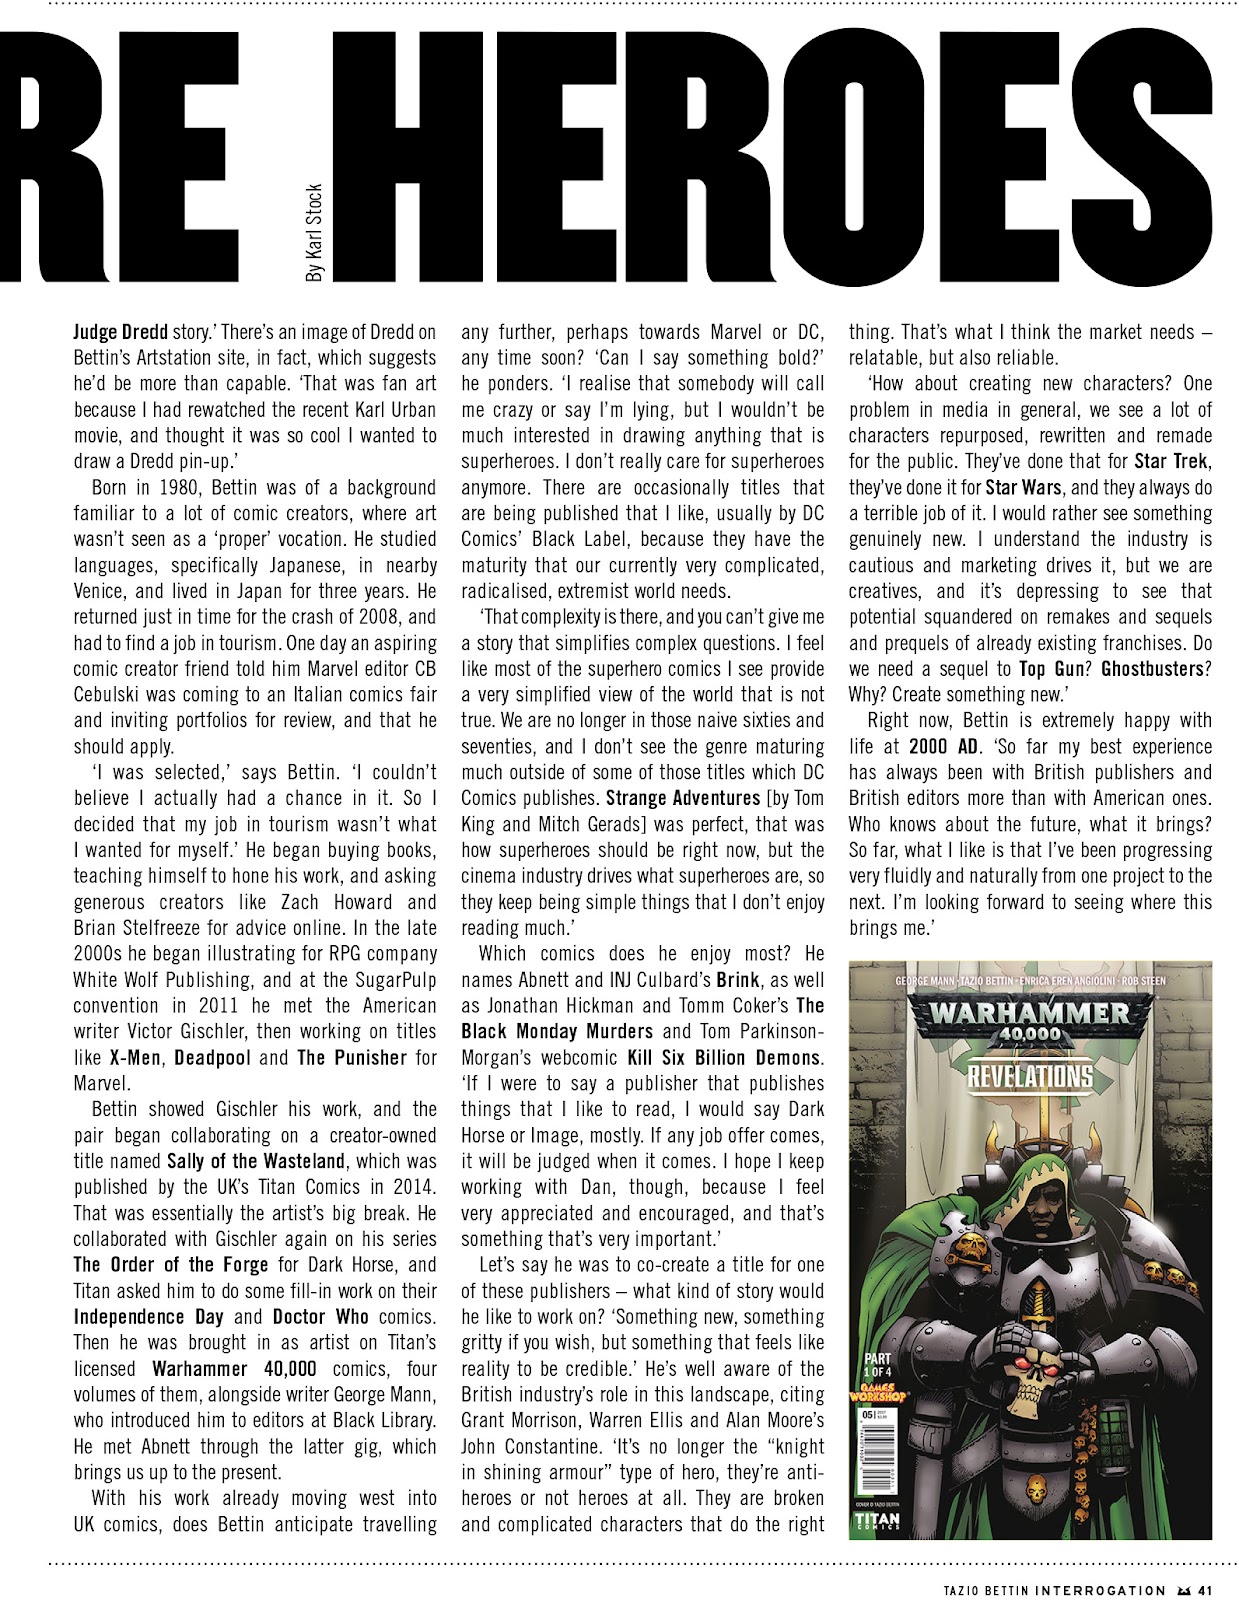 Judge Dredd Megazine (Vol. 5) issue 444 - Page 41